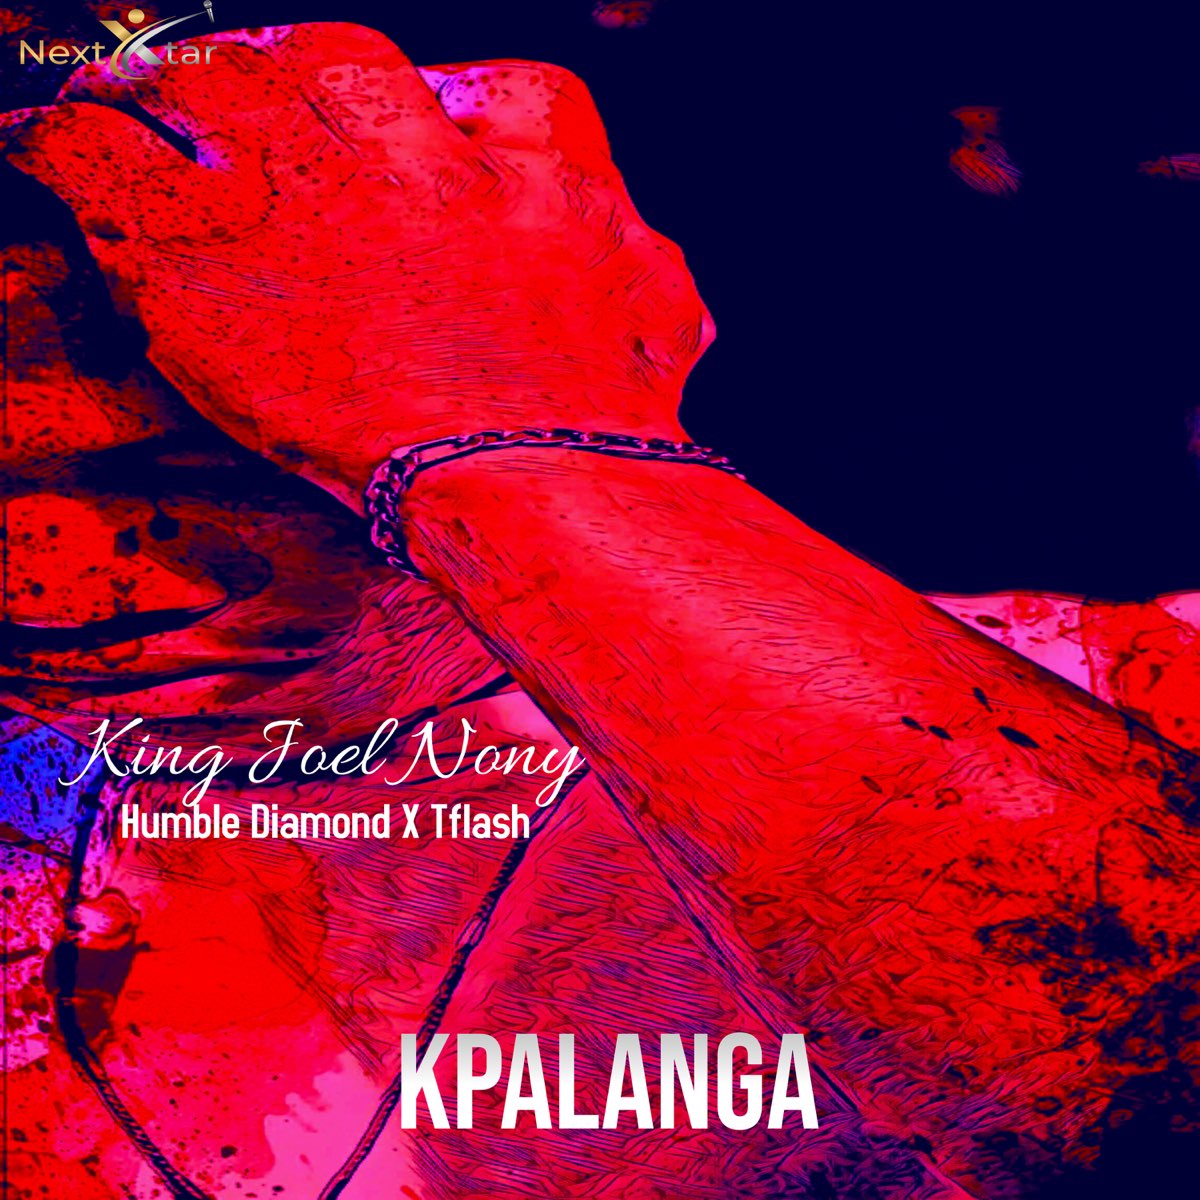 Kpalanga meaning